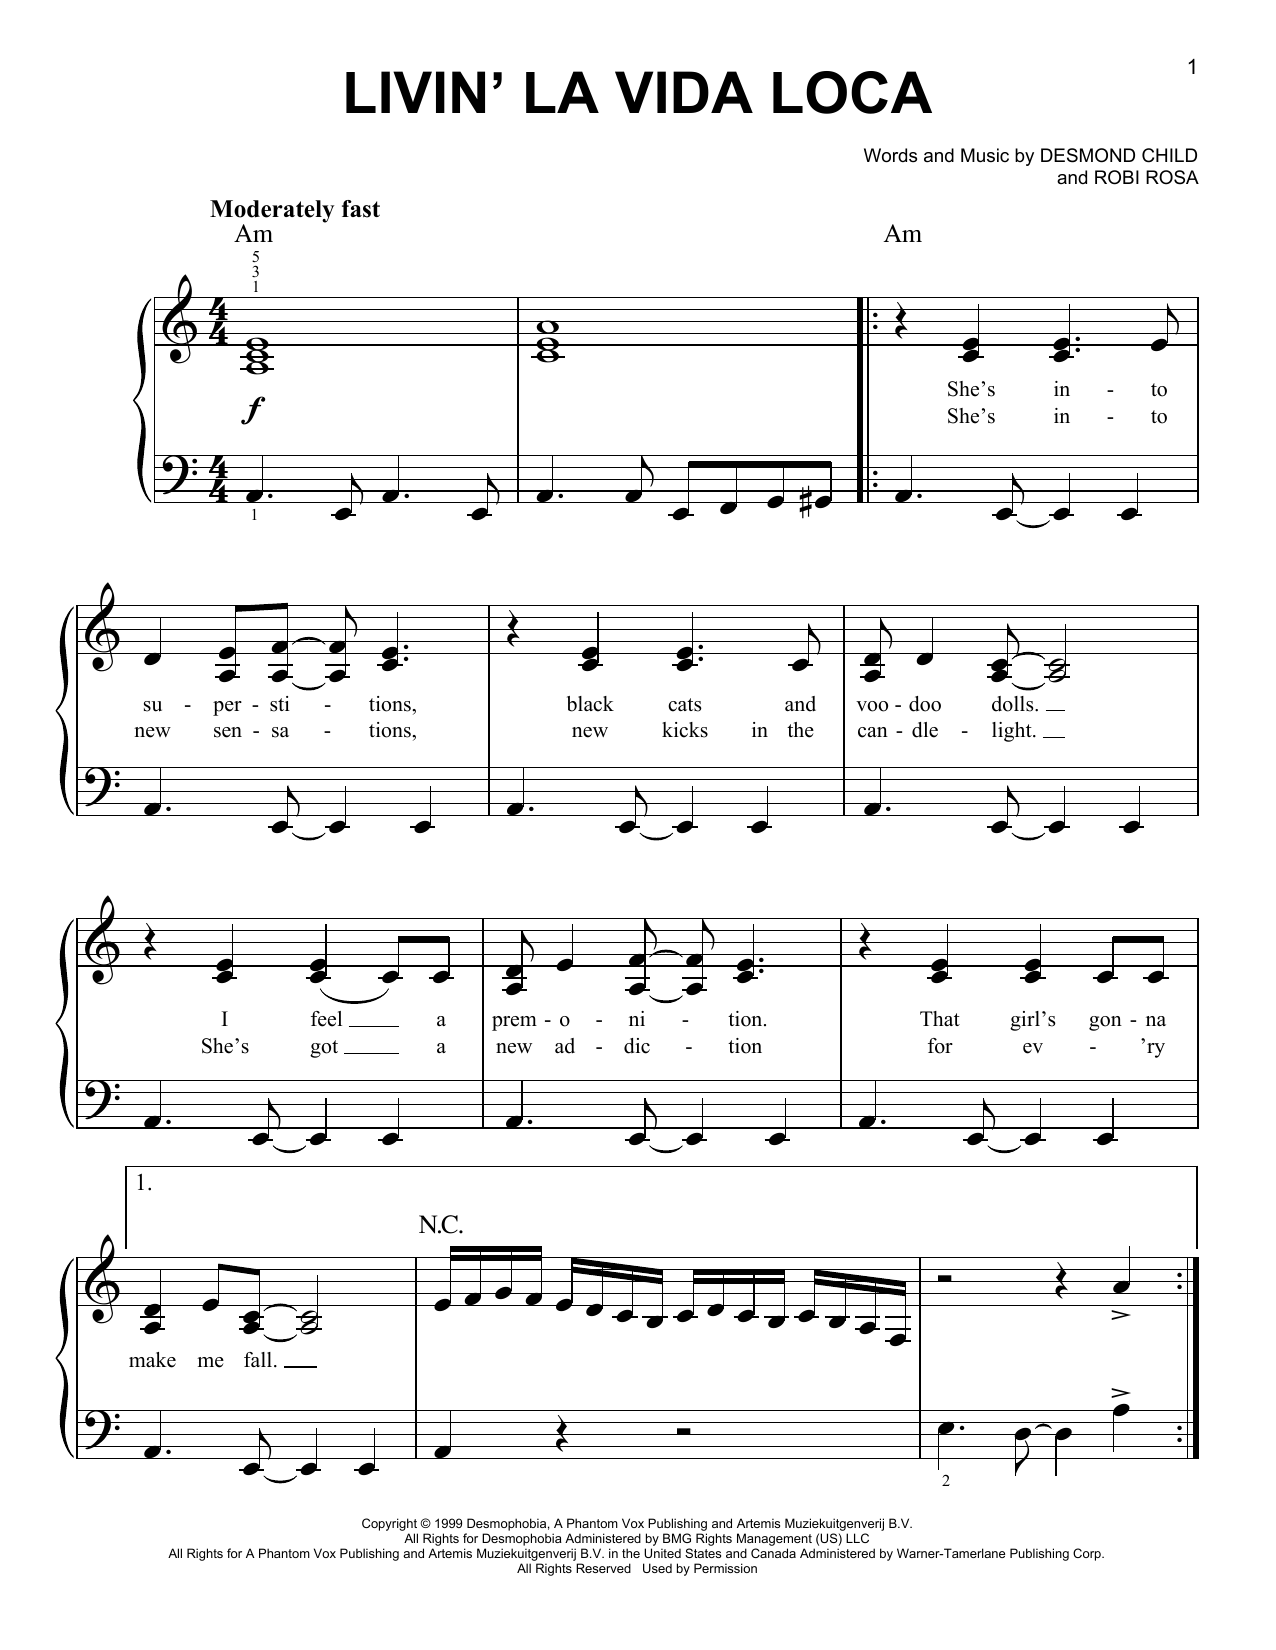 Eddie Murphy Livin' La Vida Loca sheet music notes and chords arranged for Easy Piano